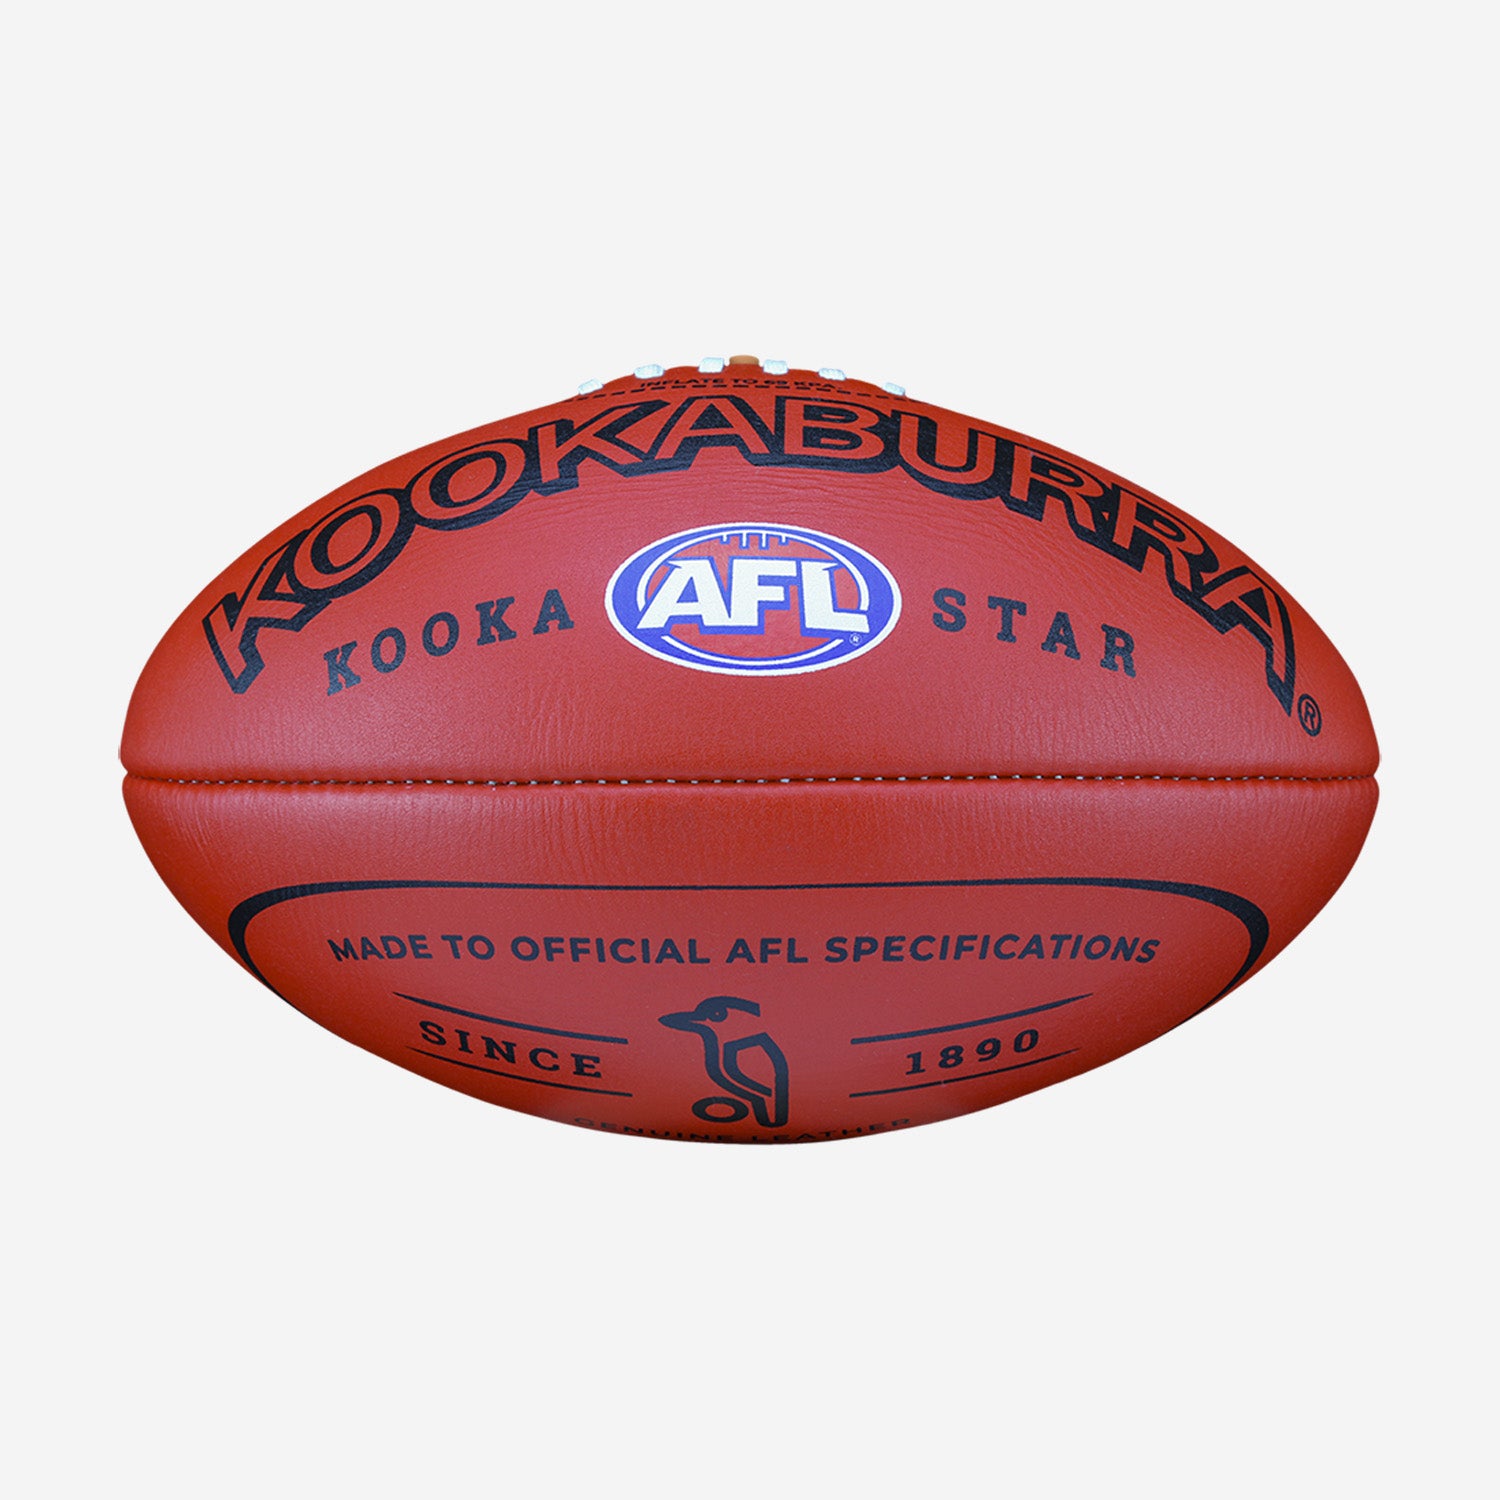 Kookaburra - Star Aussie Rules Football